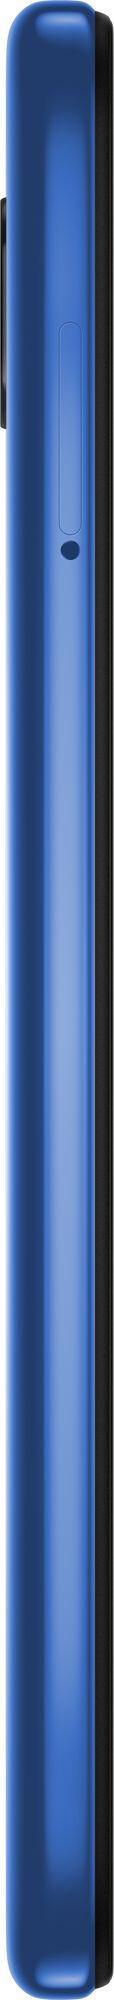 Смартфон Xiaomi Redmi 8 3/32Gb Sapfire Blue Казахстан